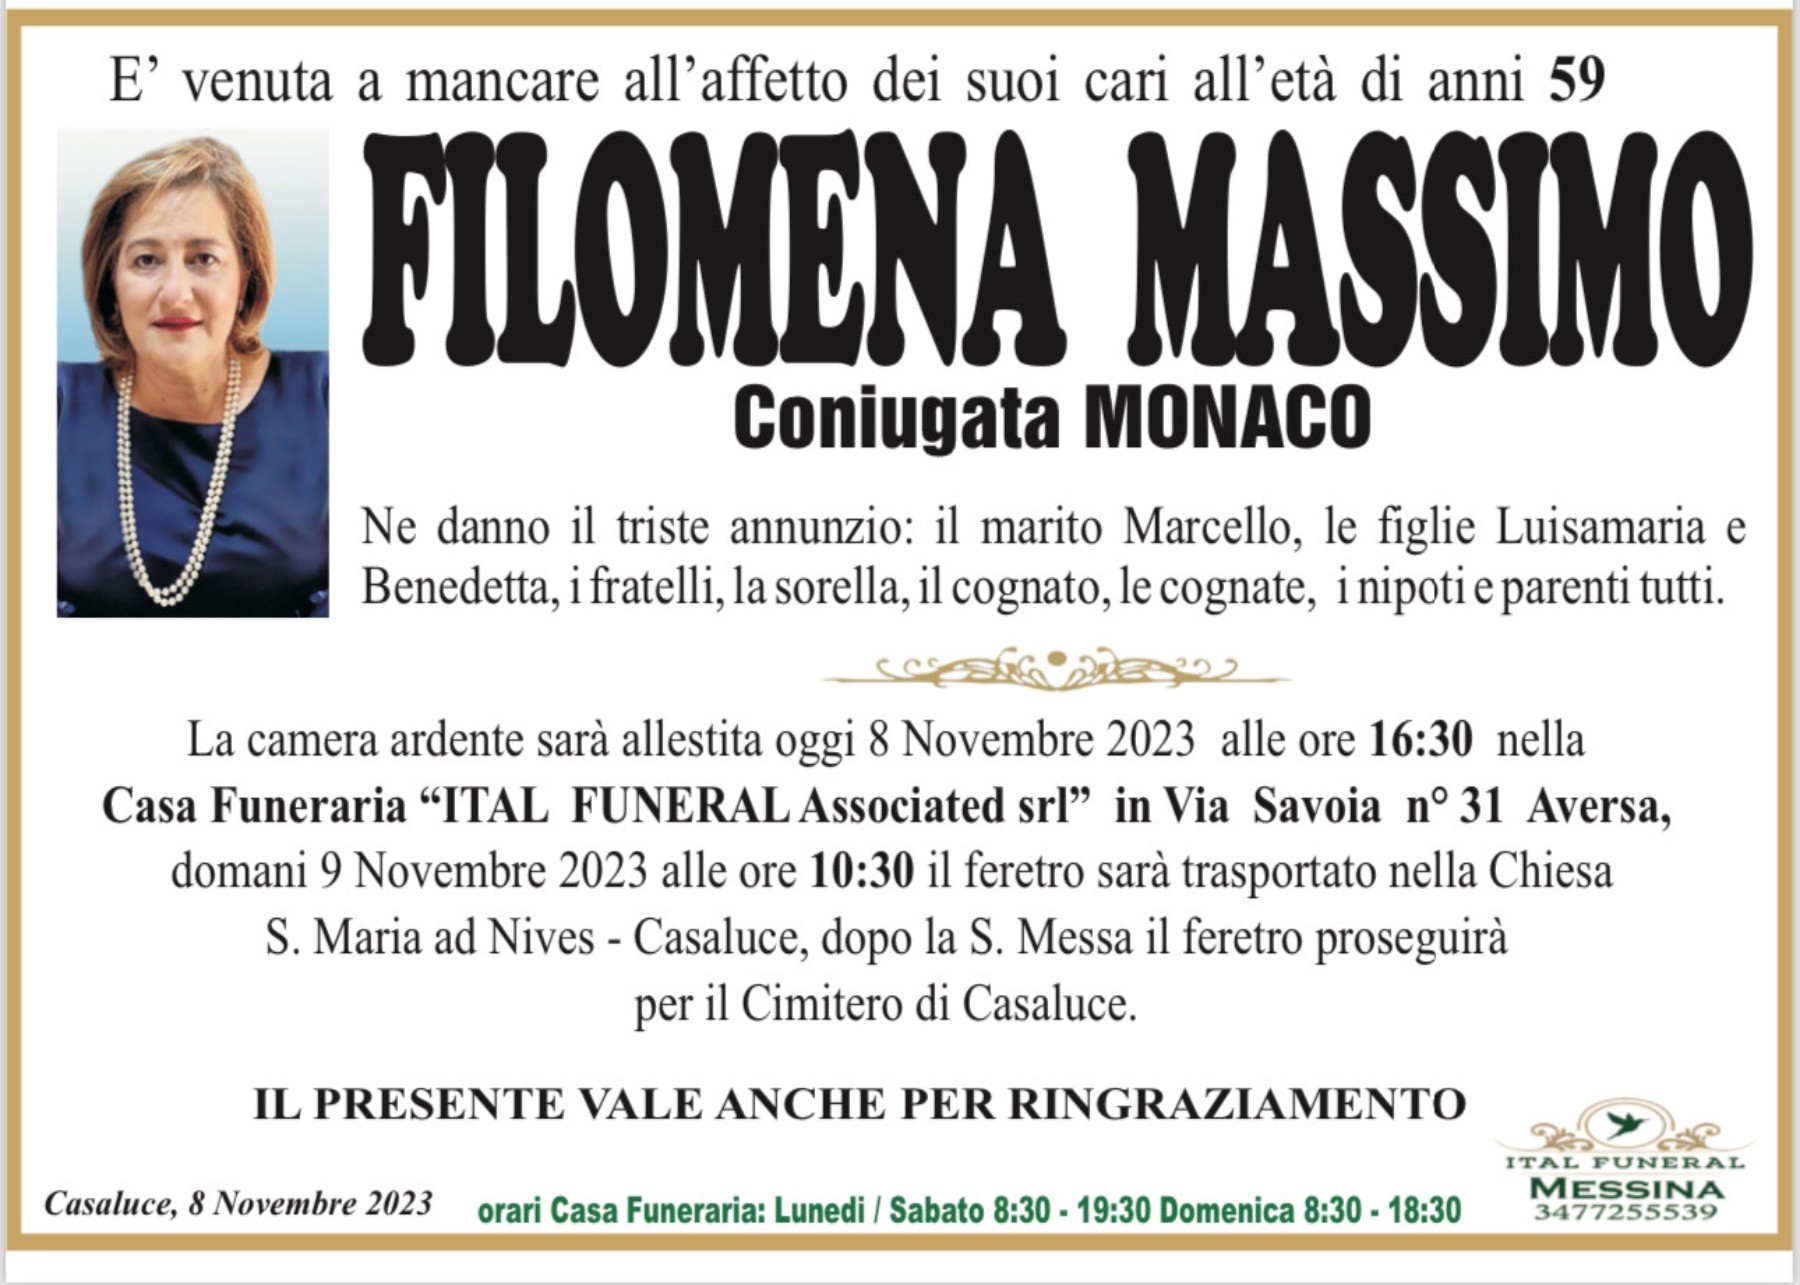 Filomena Massimo